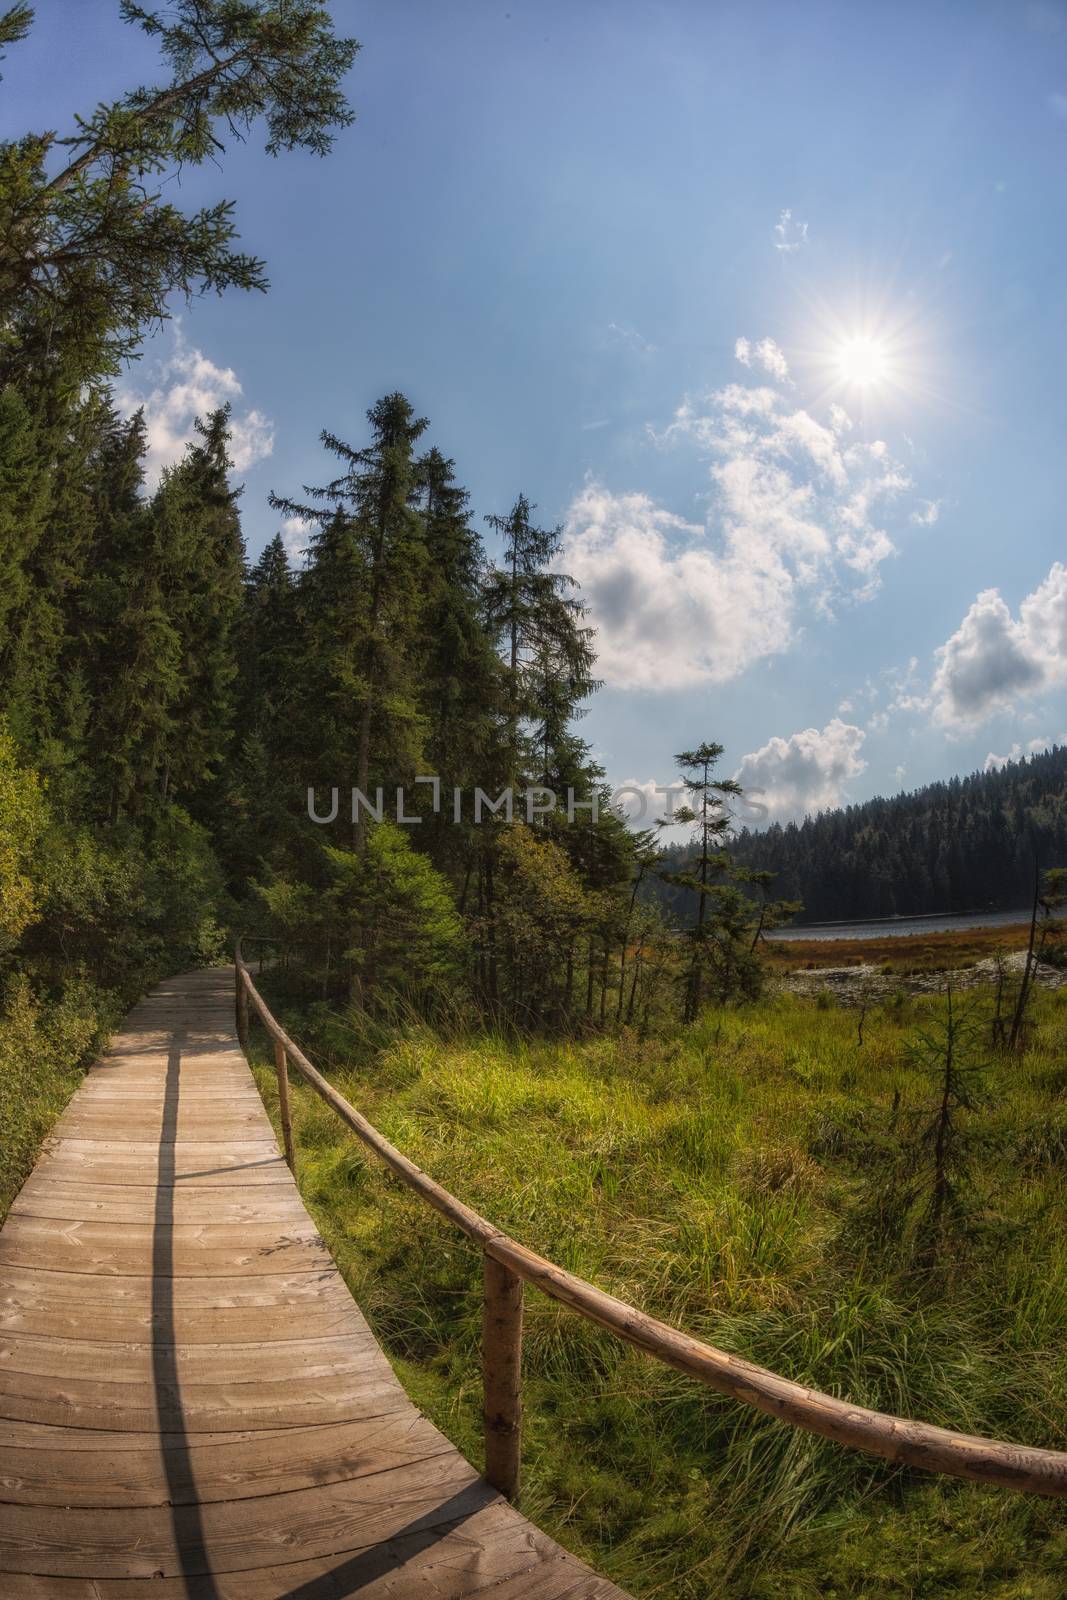 A walk around lake arbersse, Bavaria with blue Sky and sun